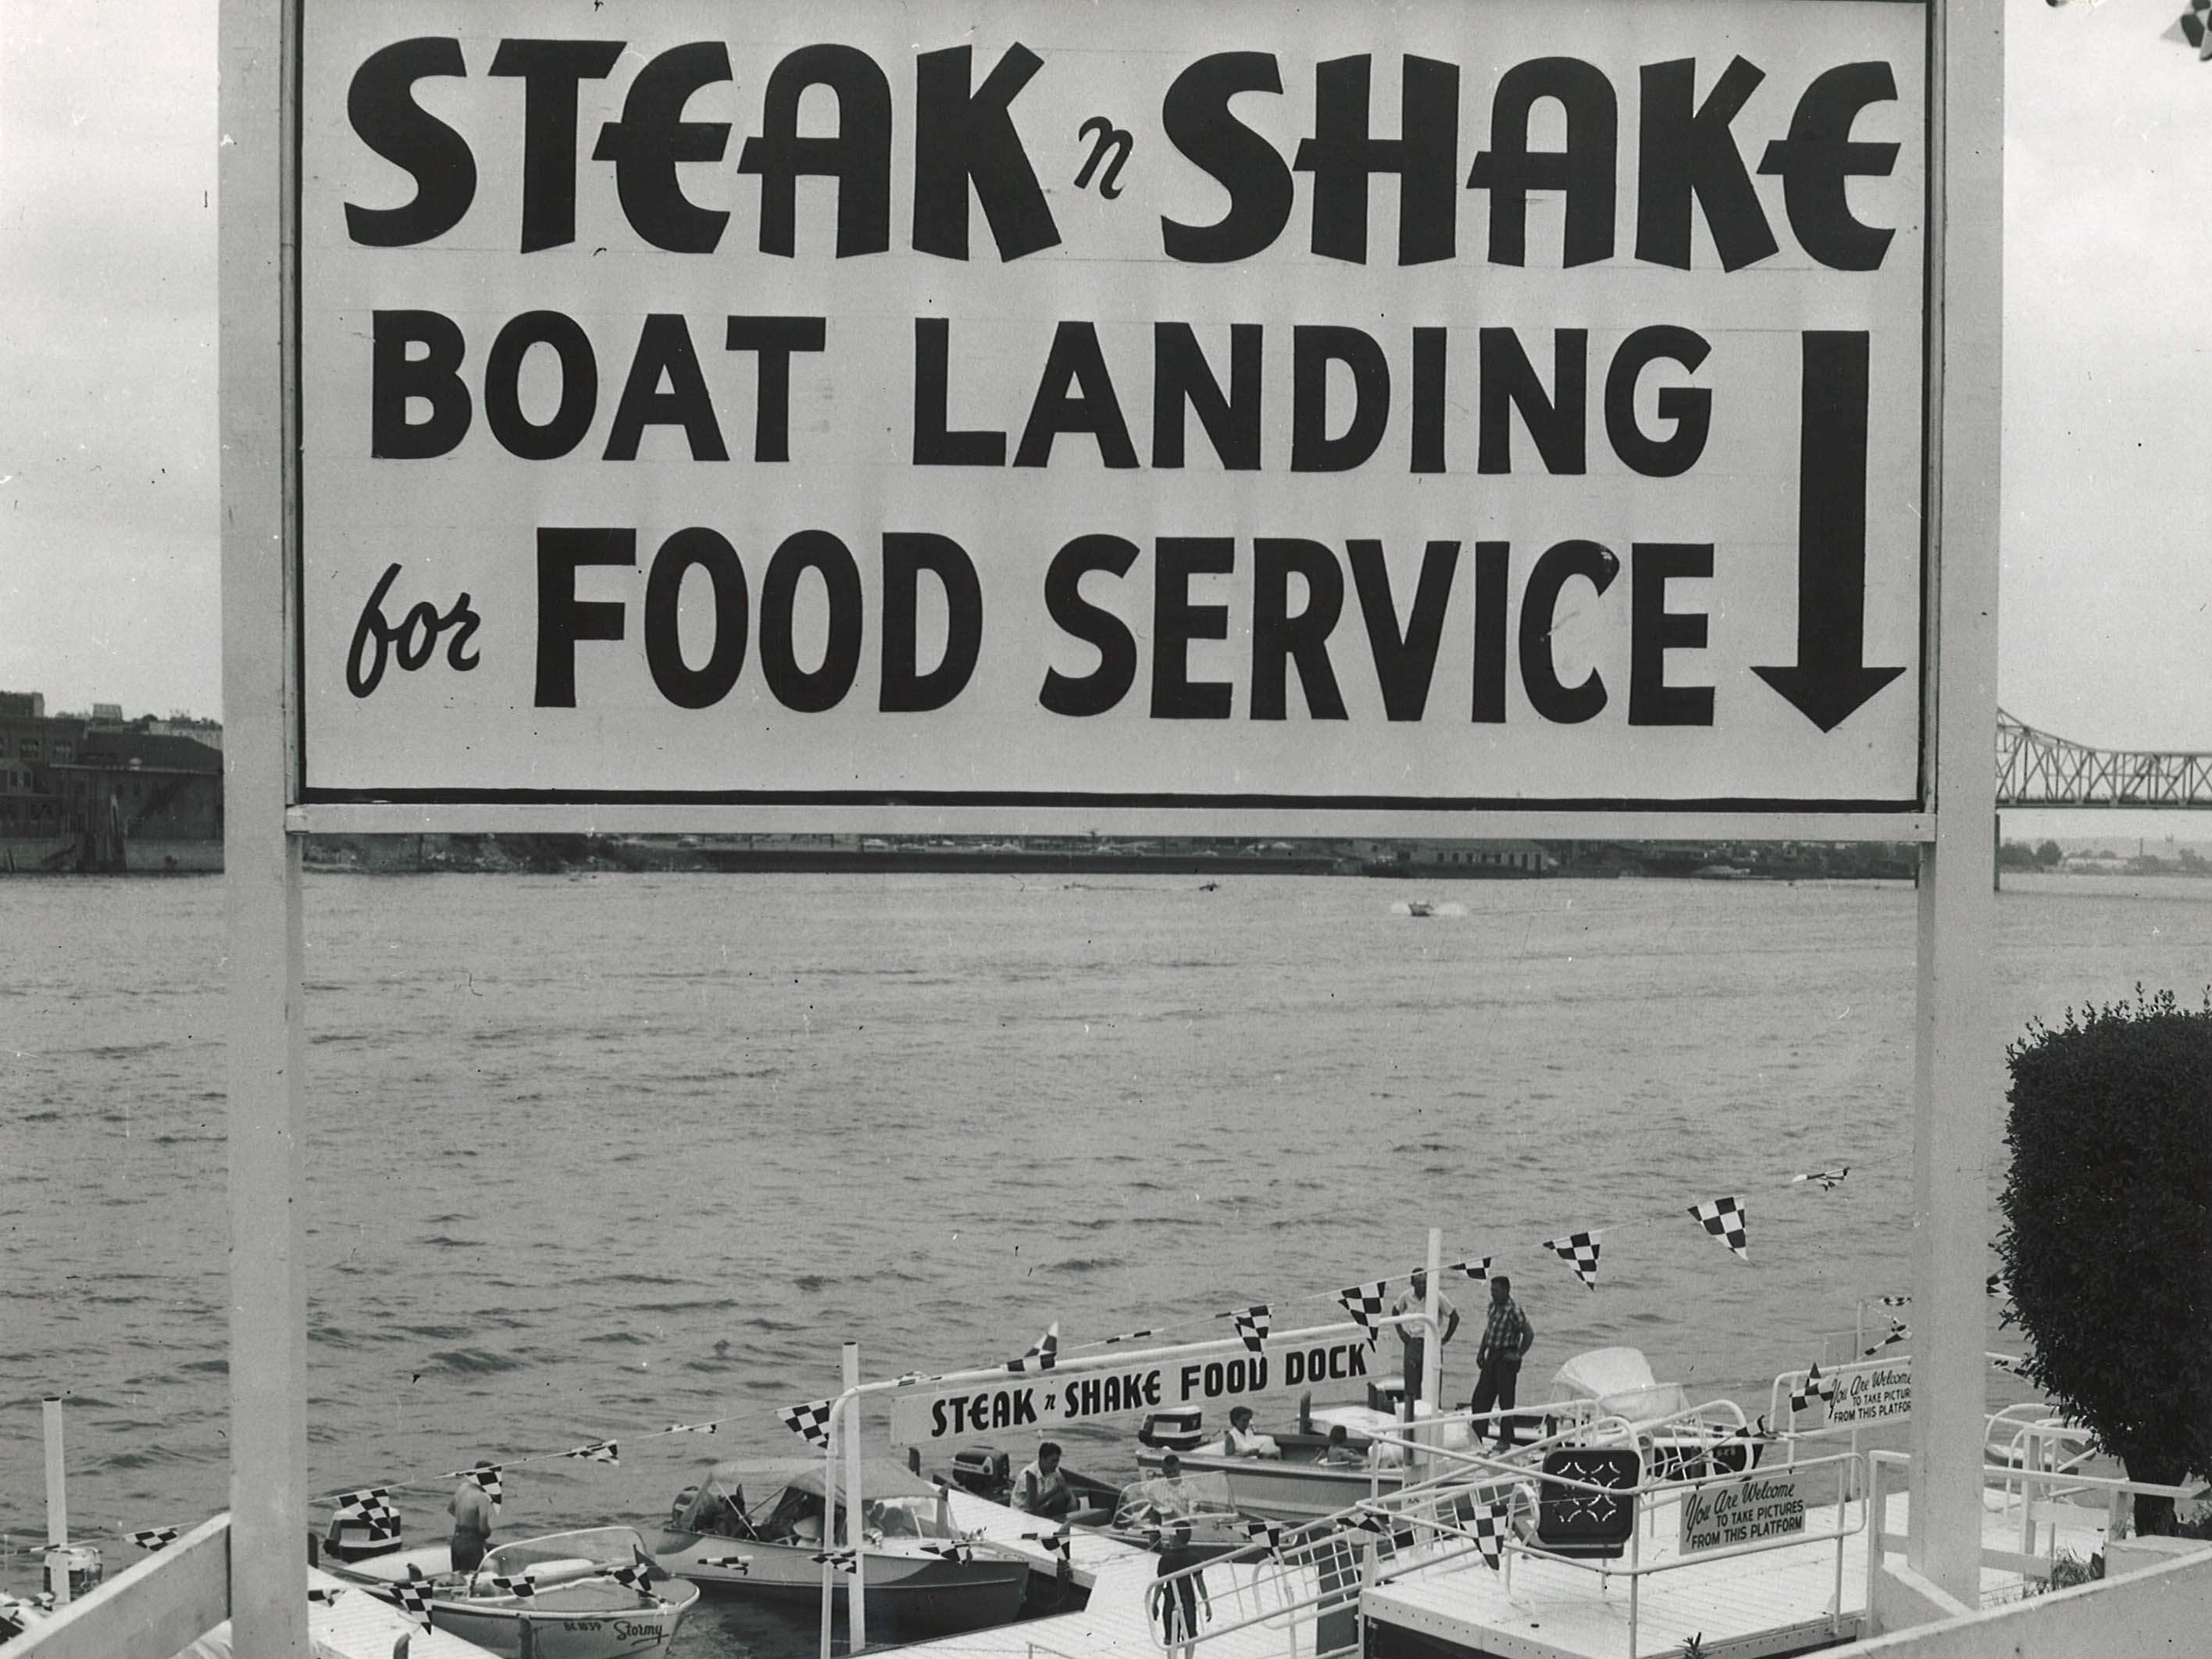 Steak 'n Shake boat landing